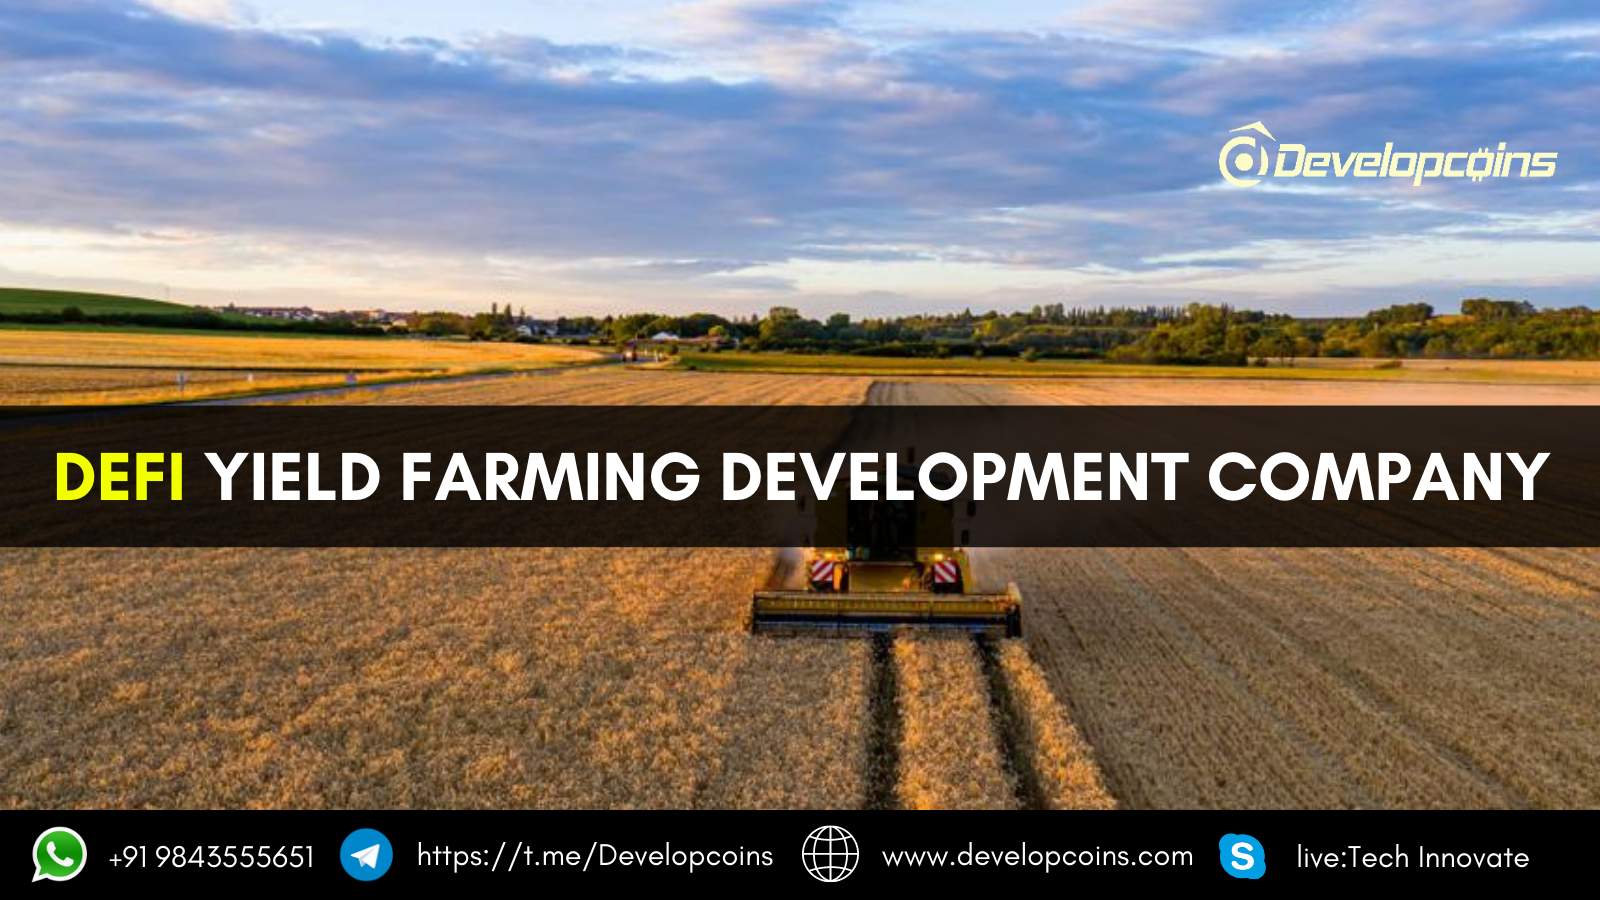 DeFi Yield Farming Development Services & Solutions